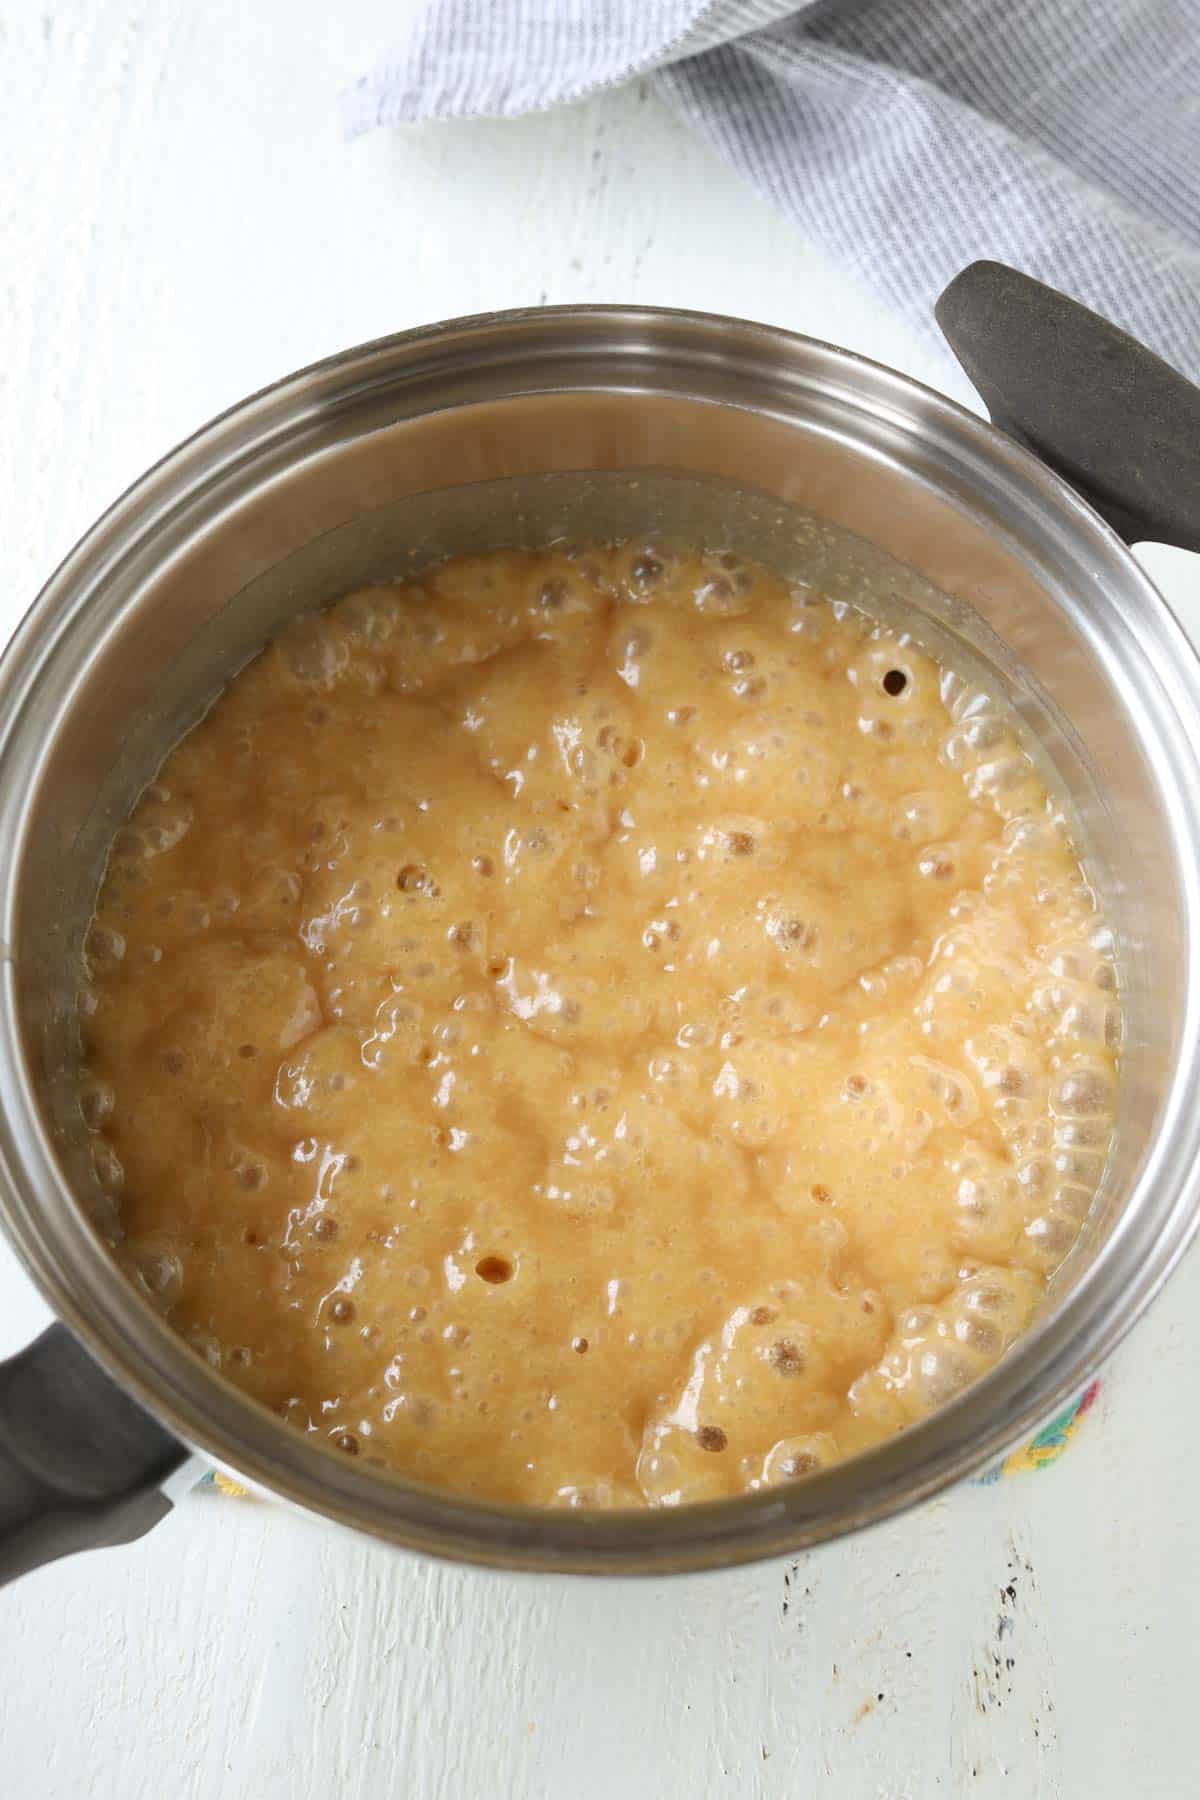 A boiling caramel mixture in a saucepan.